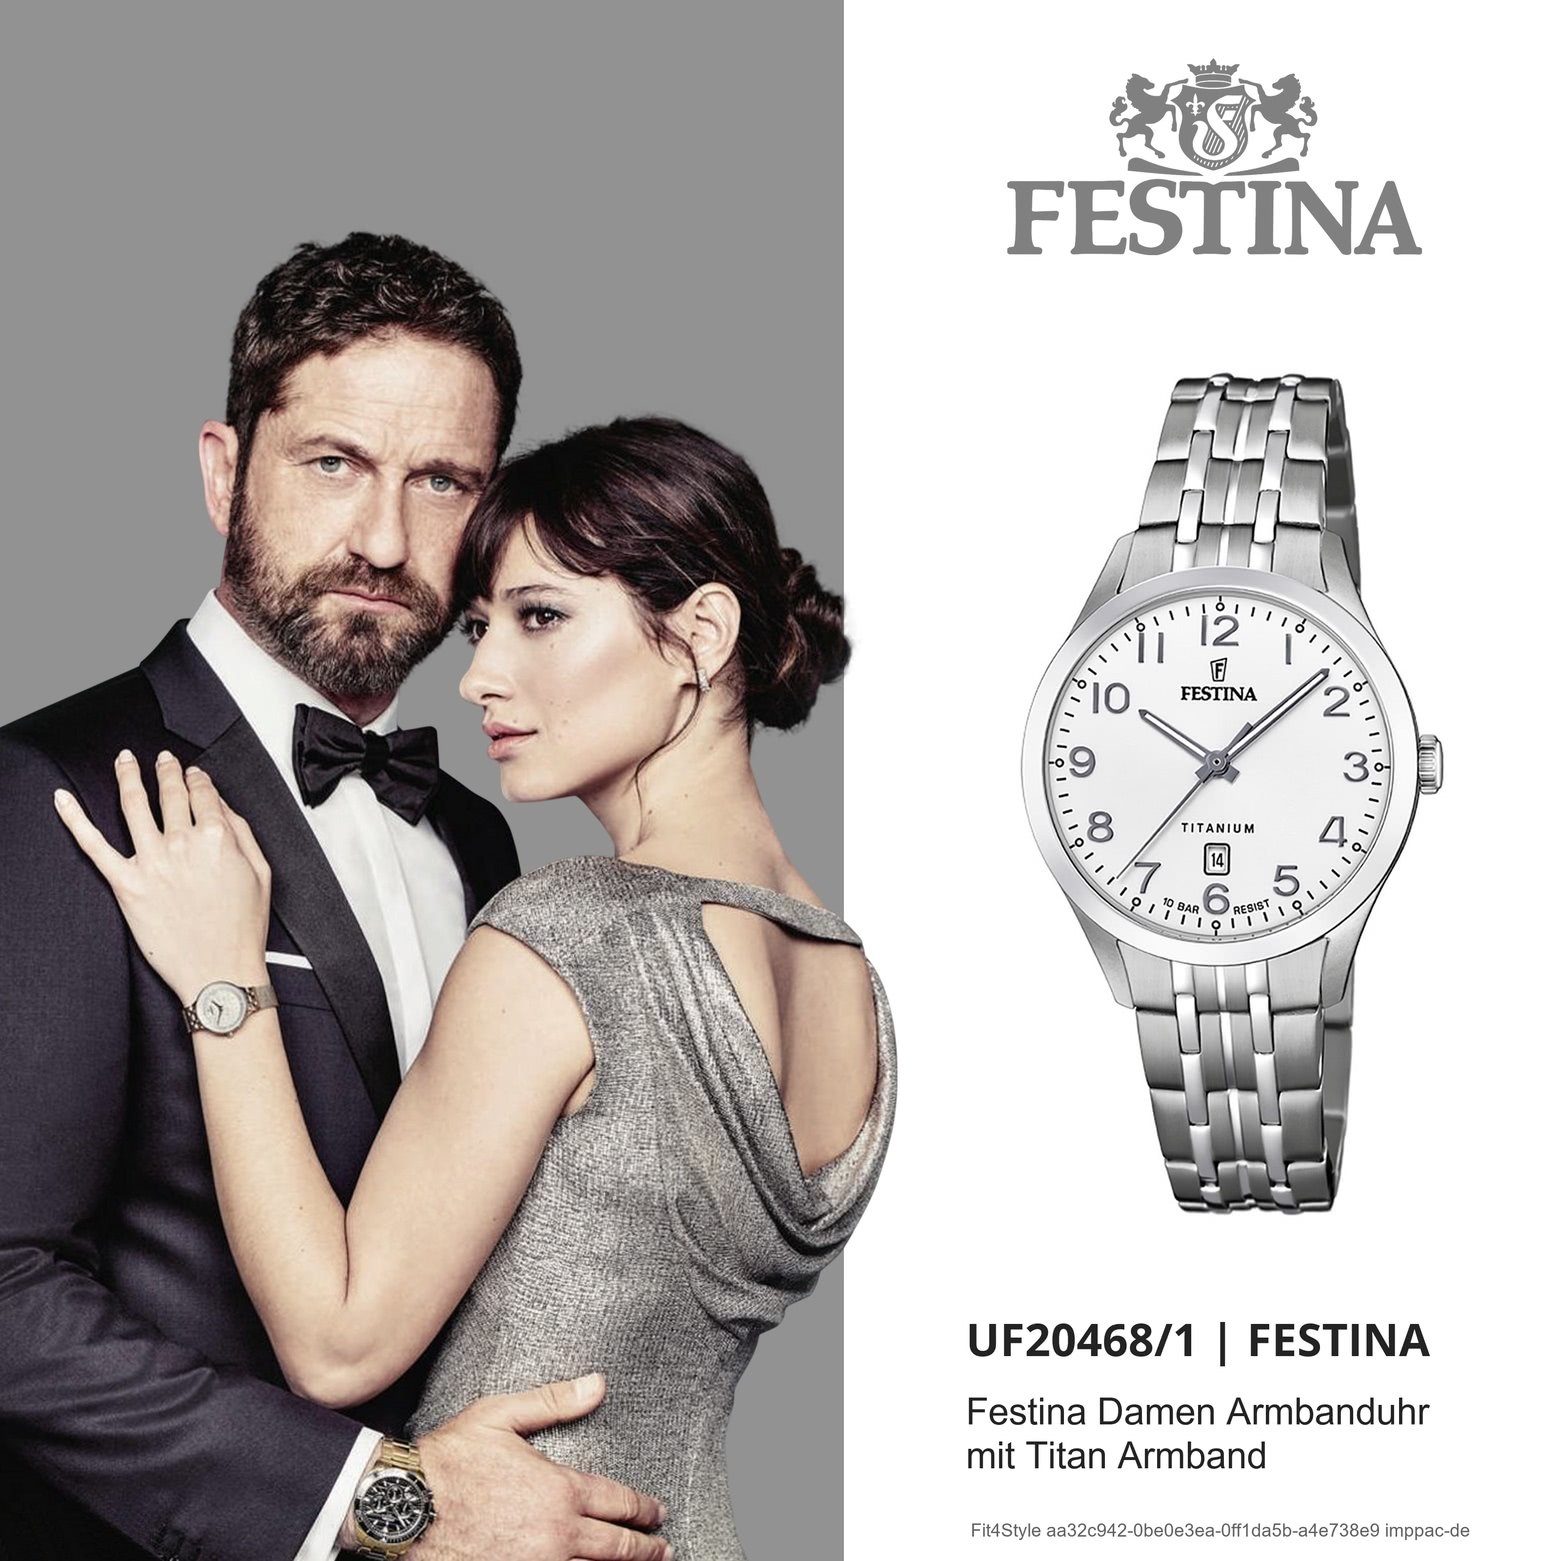 Festina Quarzuhr Festina F20468/1 rund, Damen Uhr Titanarmband Titan, silber Analog Armbanduhr Damen